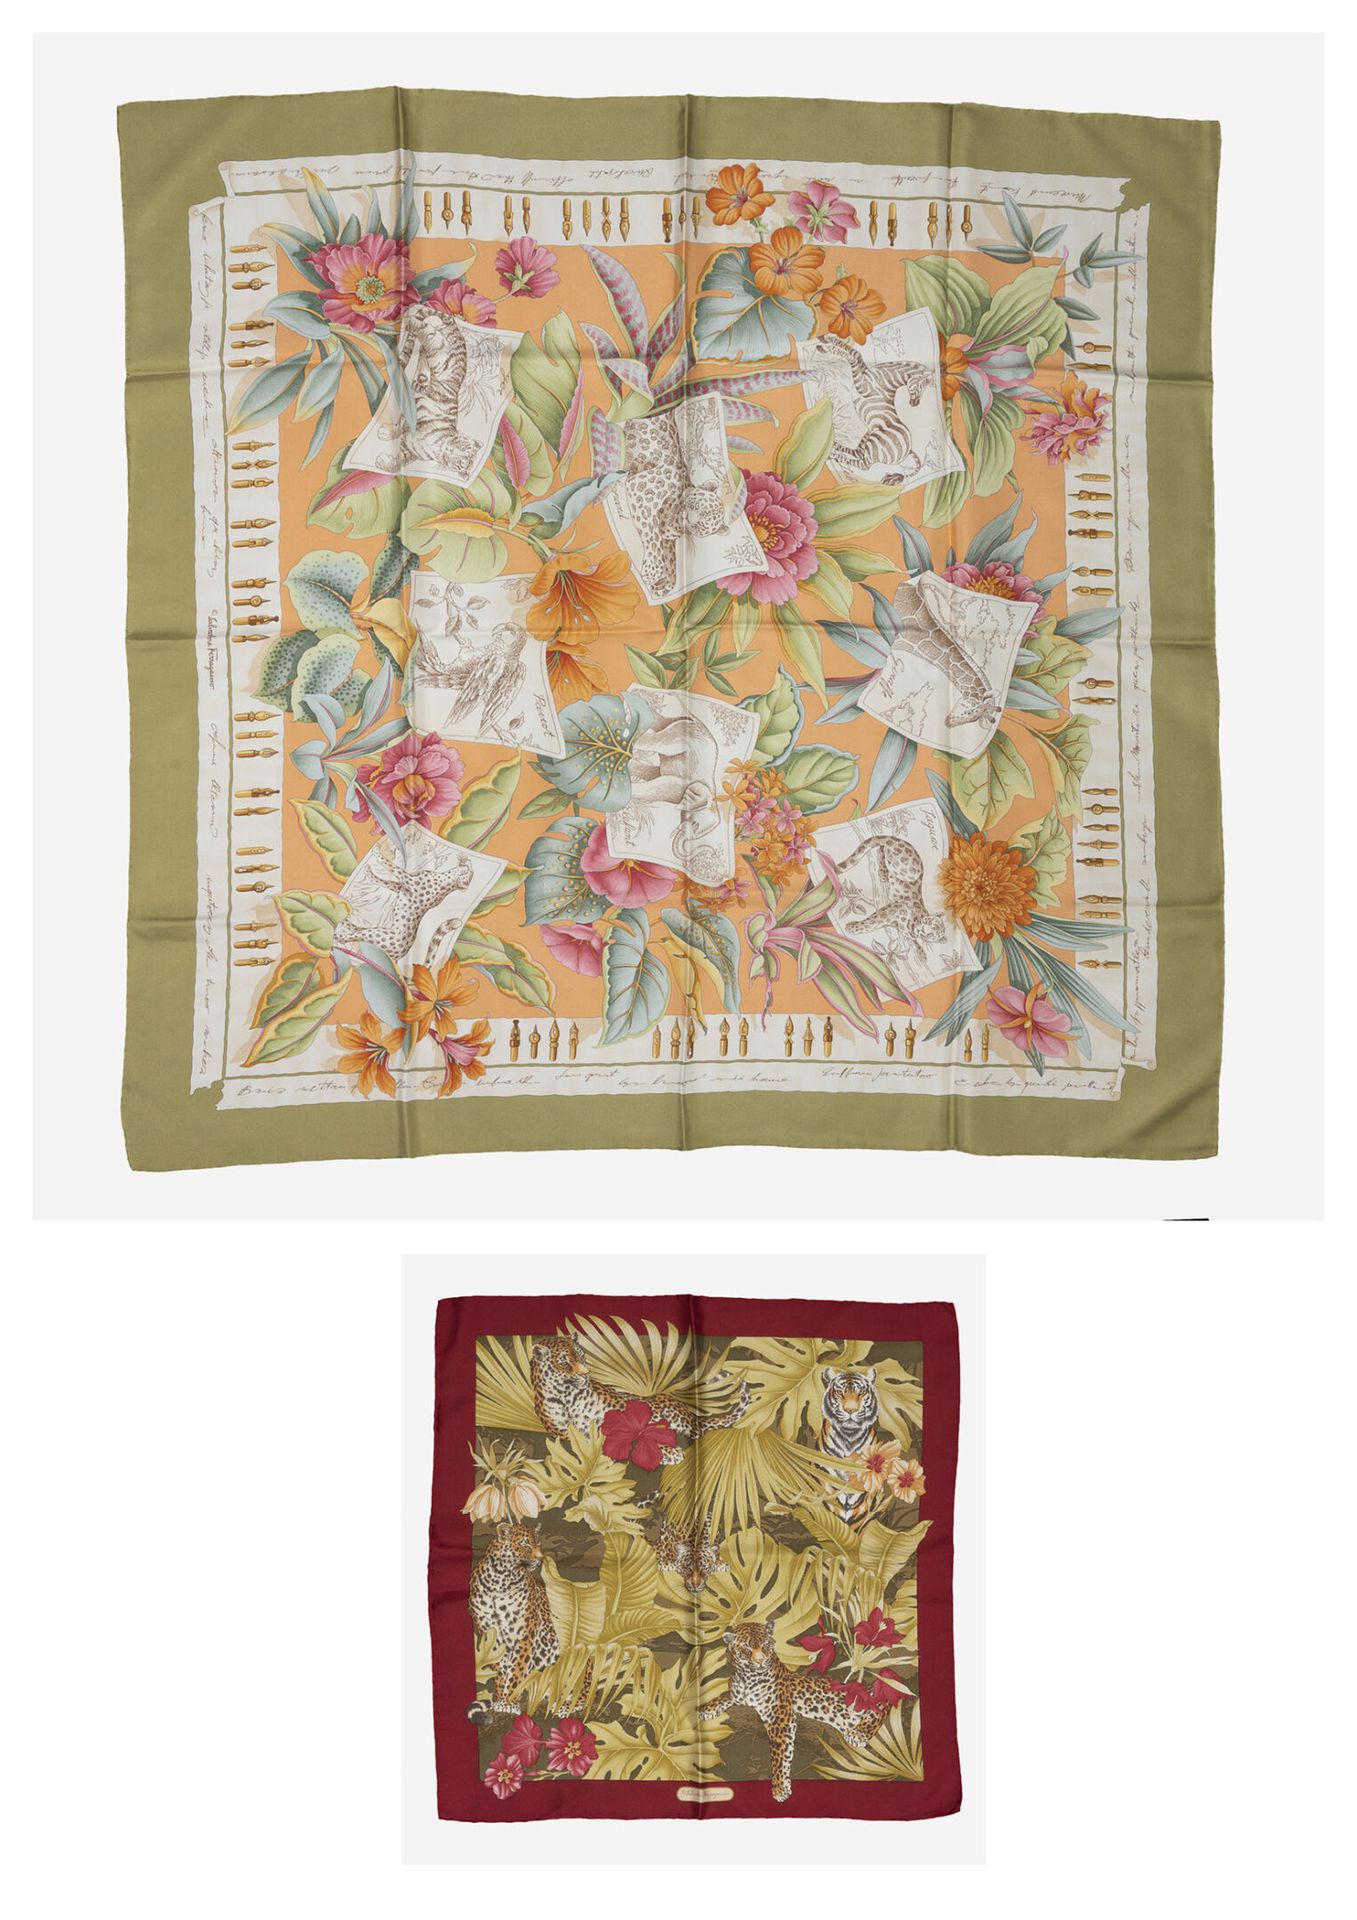 Salvatore FERRAGAMO Lot of squares:
- Printed silk square decorated with felines&hellip;